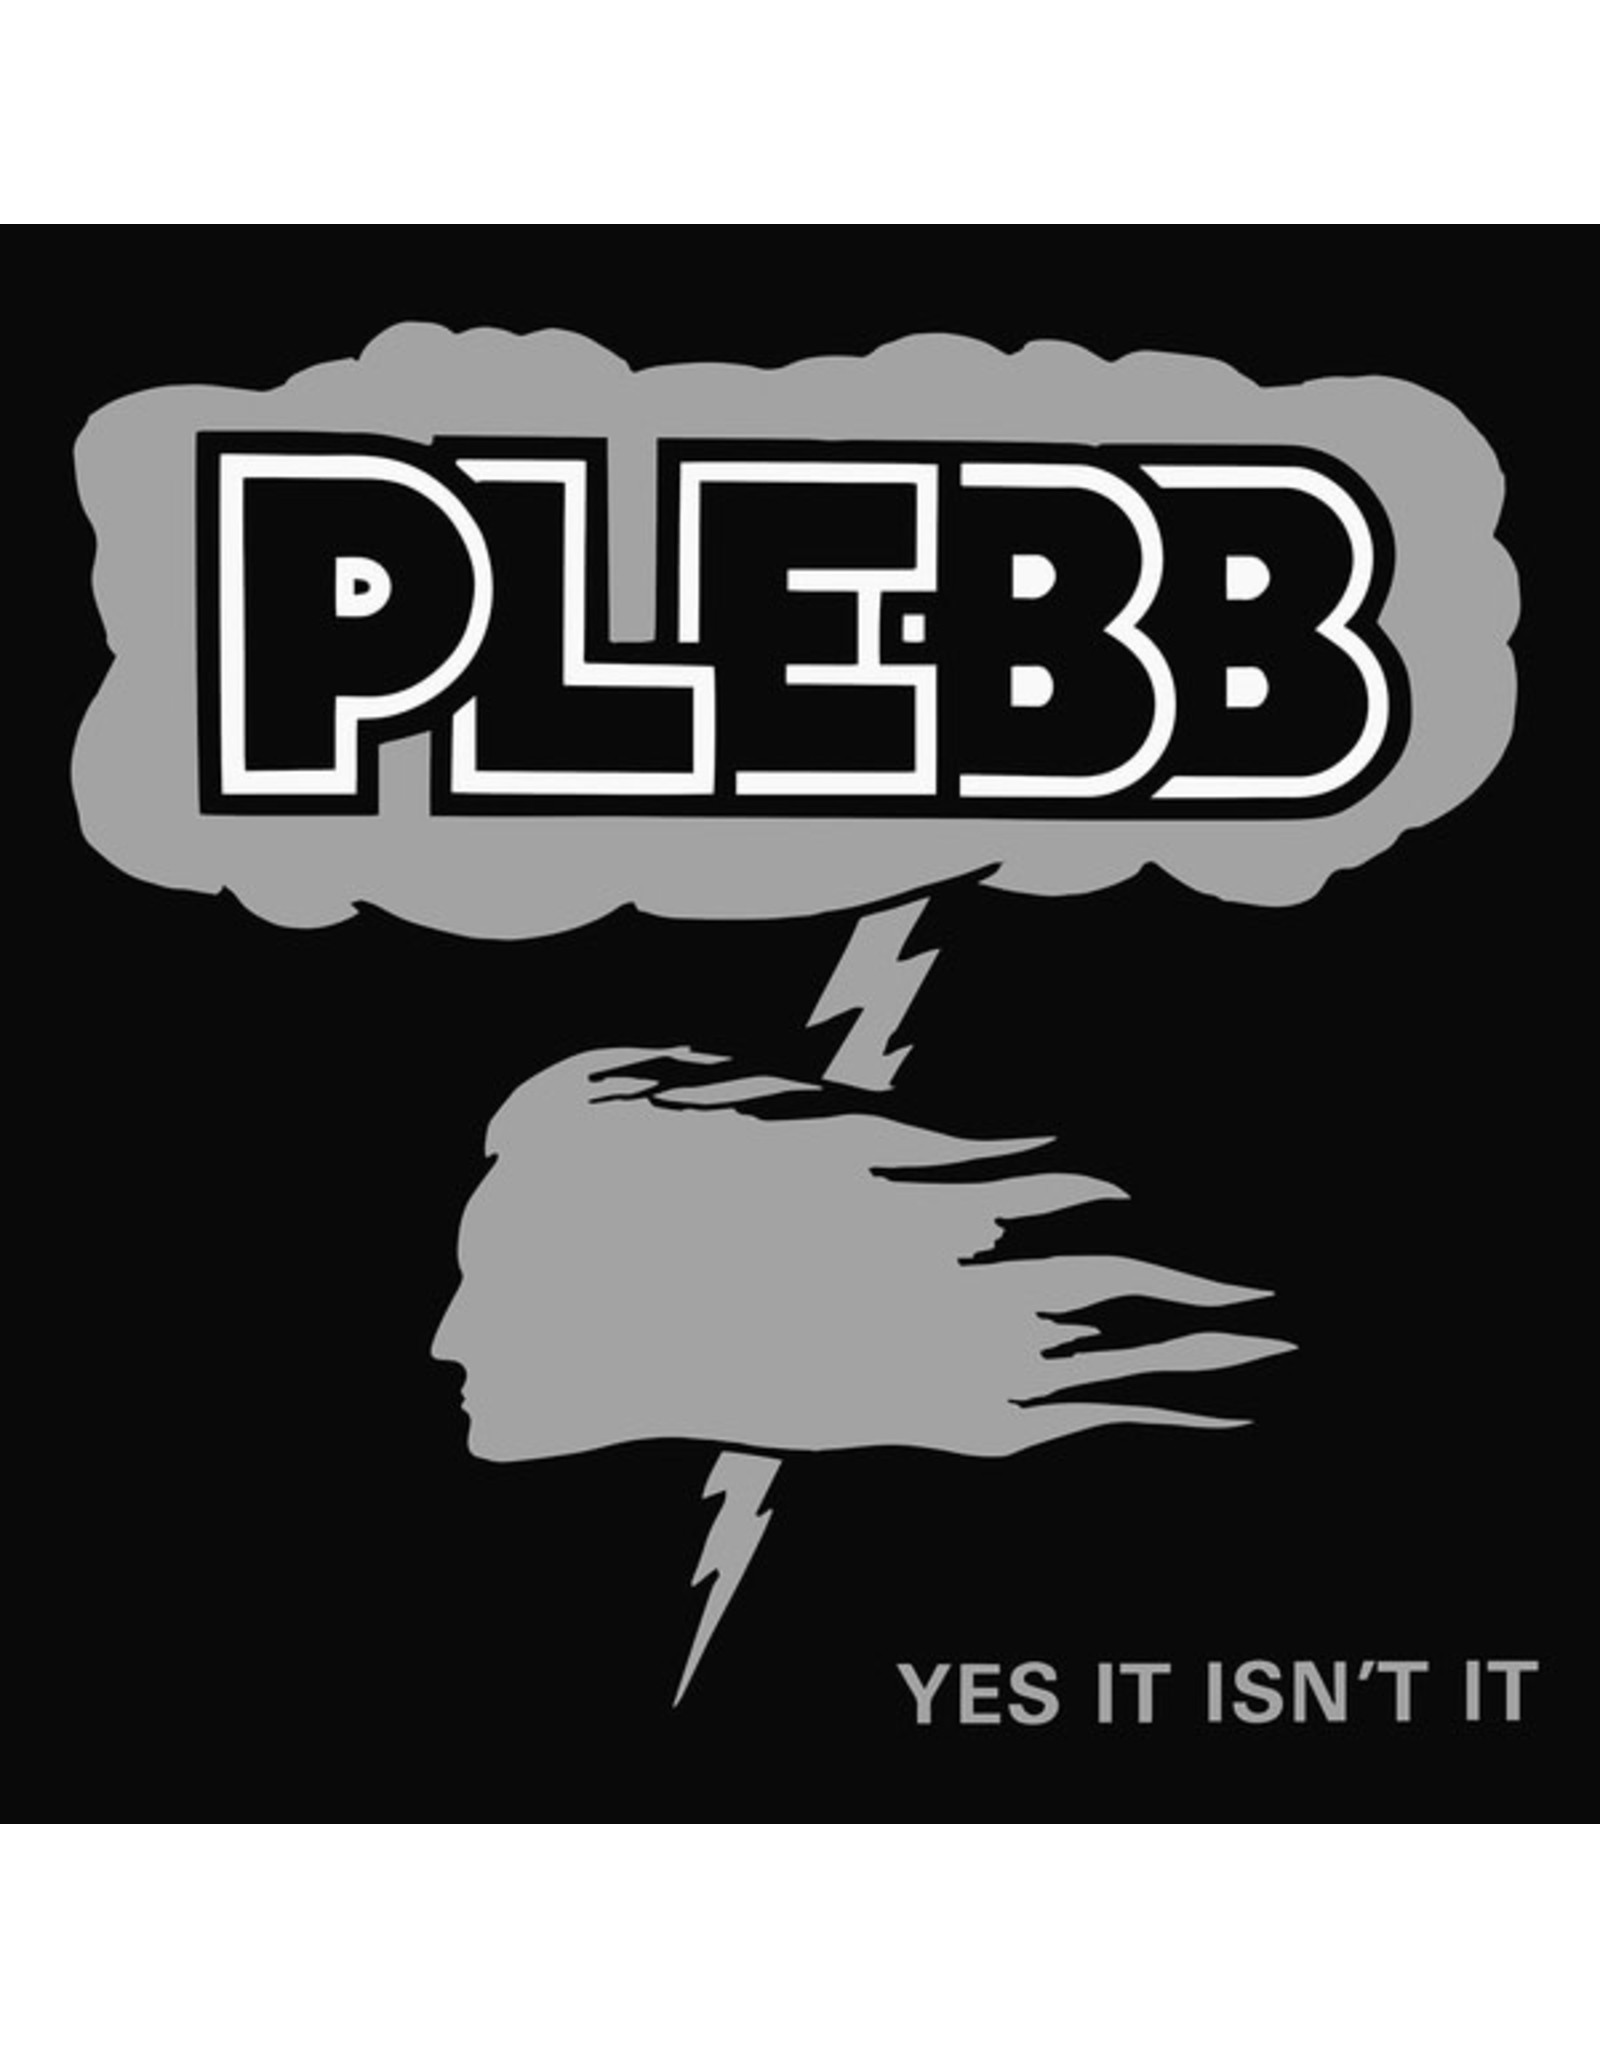 New Vinyl Plebb - Yes It Isn't It LP